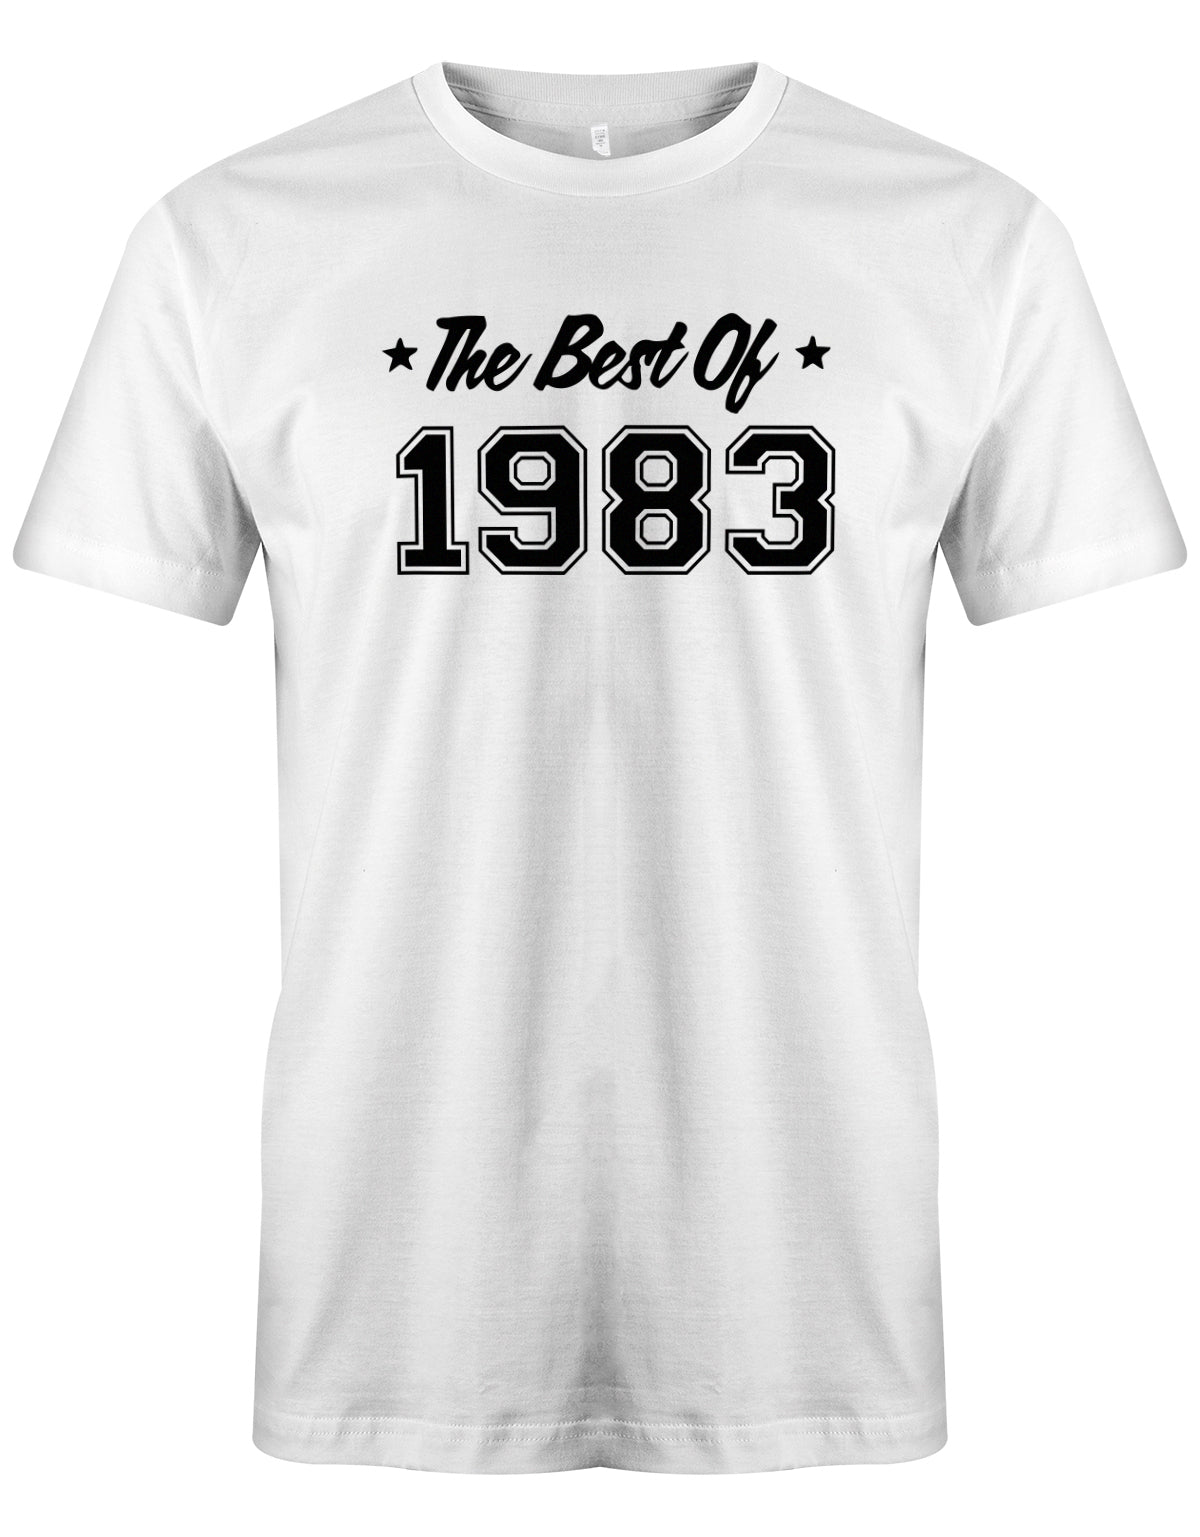 The best of 1983 - T-Shirt 40 Geburtstag Männer - Jahrgang 1983 TShirt  Weiss